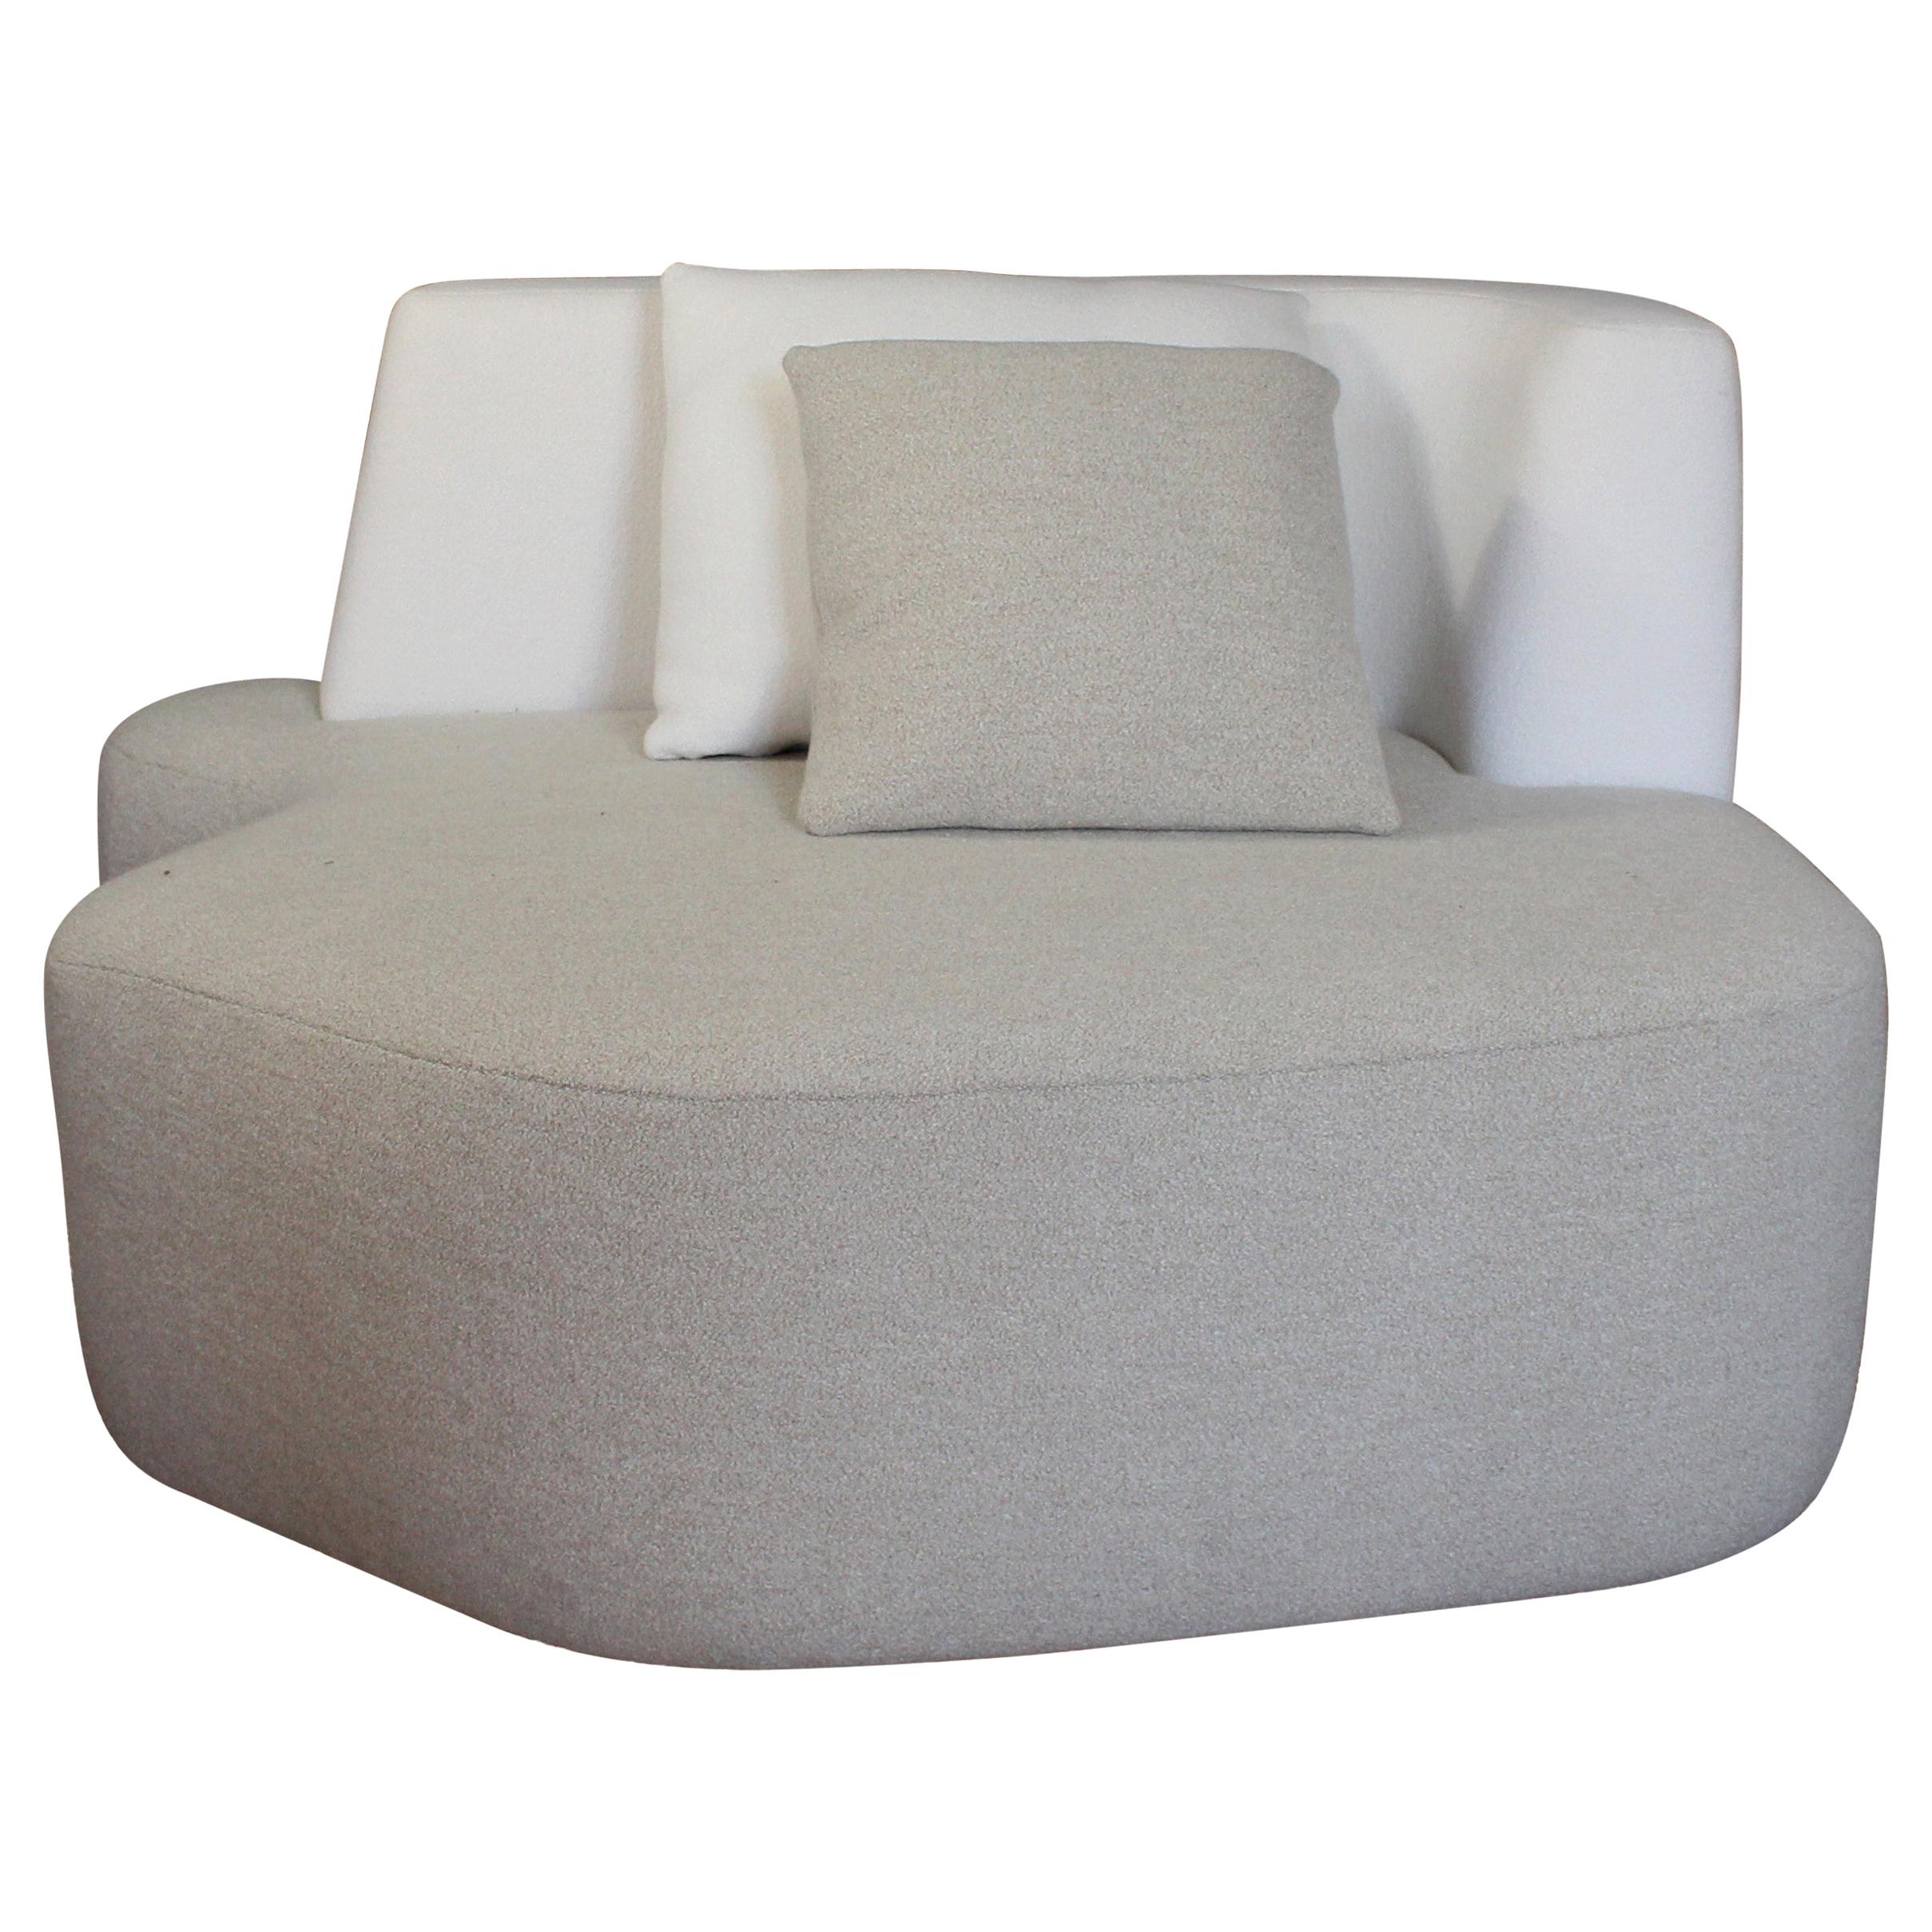 Bespoke Organic Sofa in White and Cream Wool Handmade in France Customizable